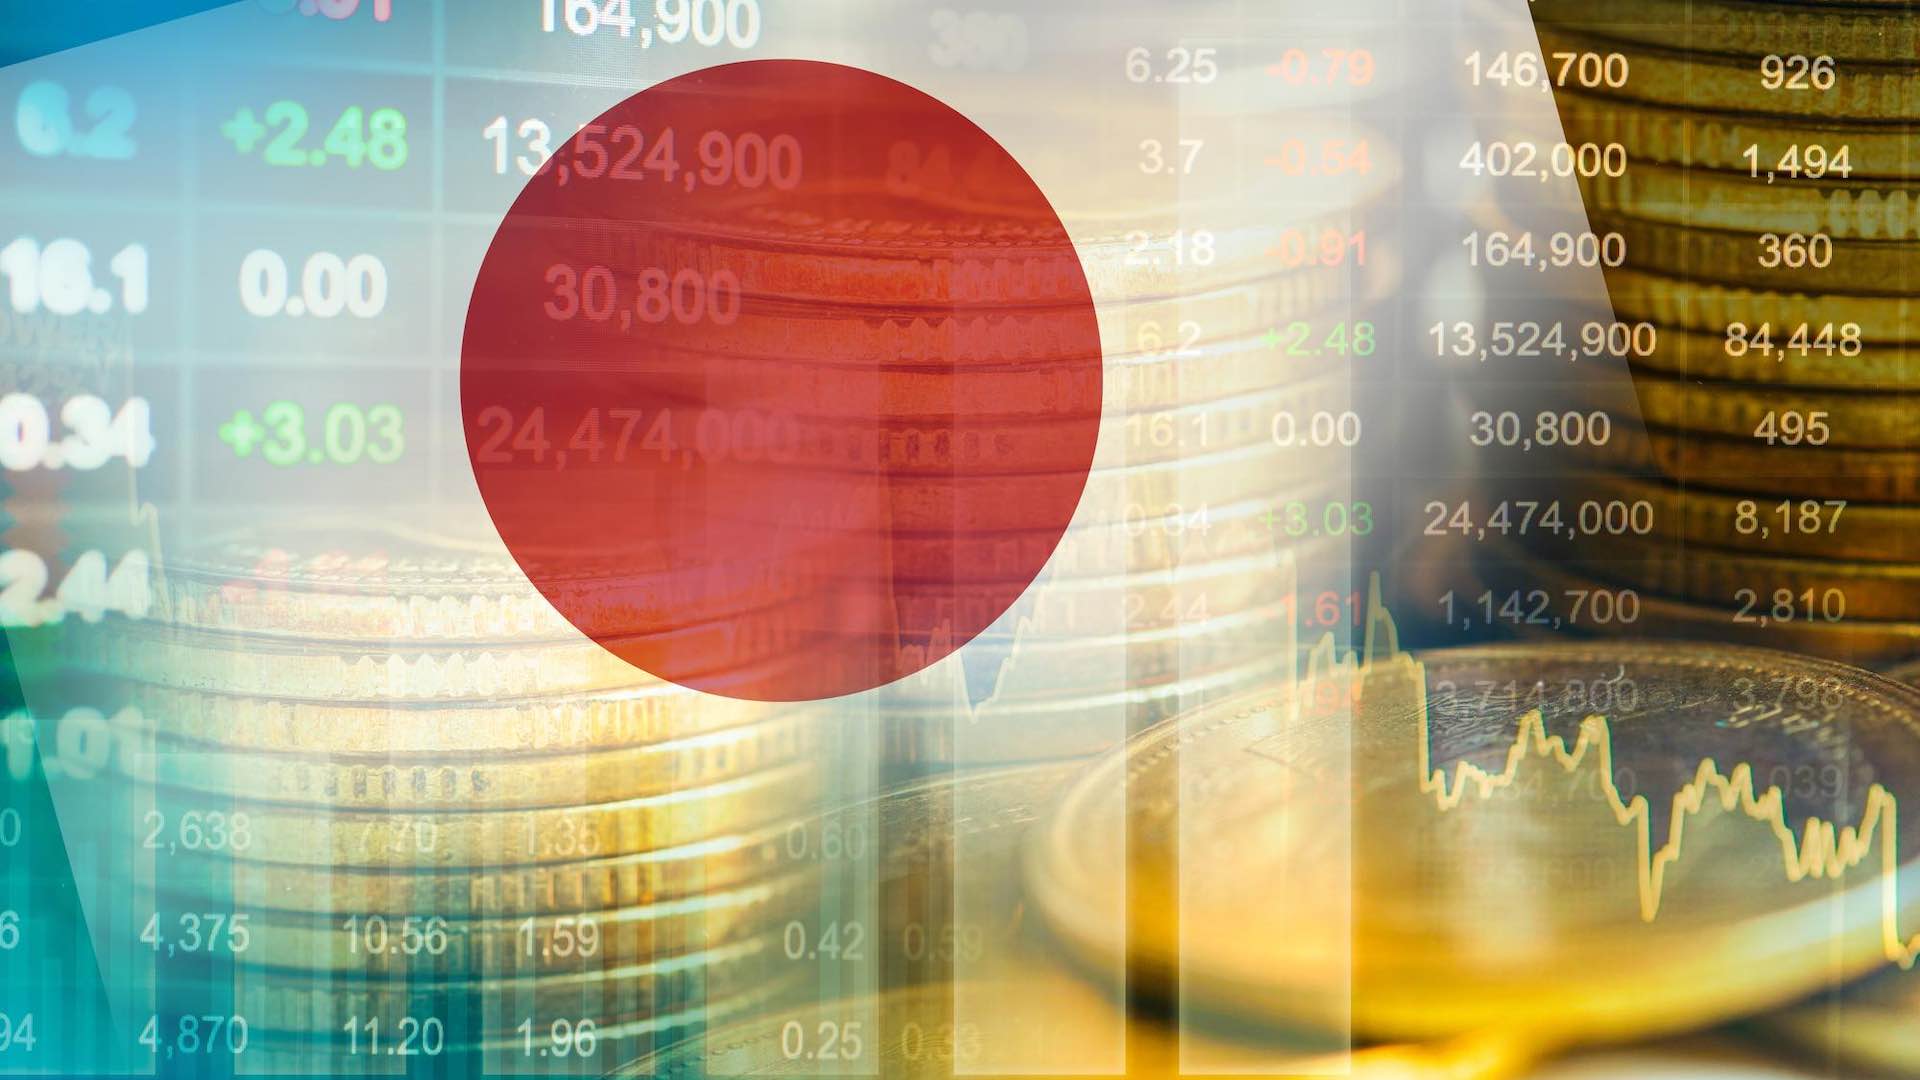 Japan rolls out 3 billion economic plan amid rising inflation